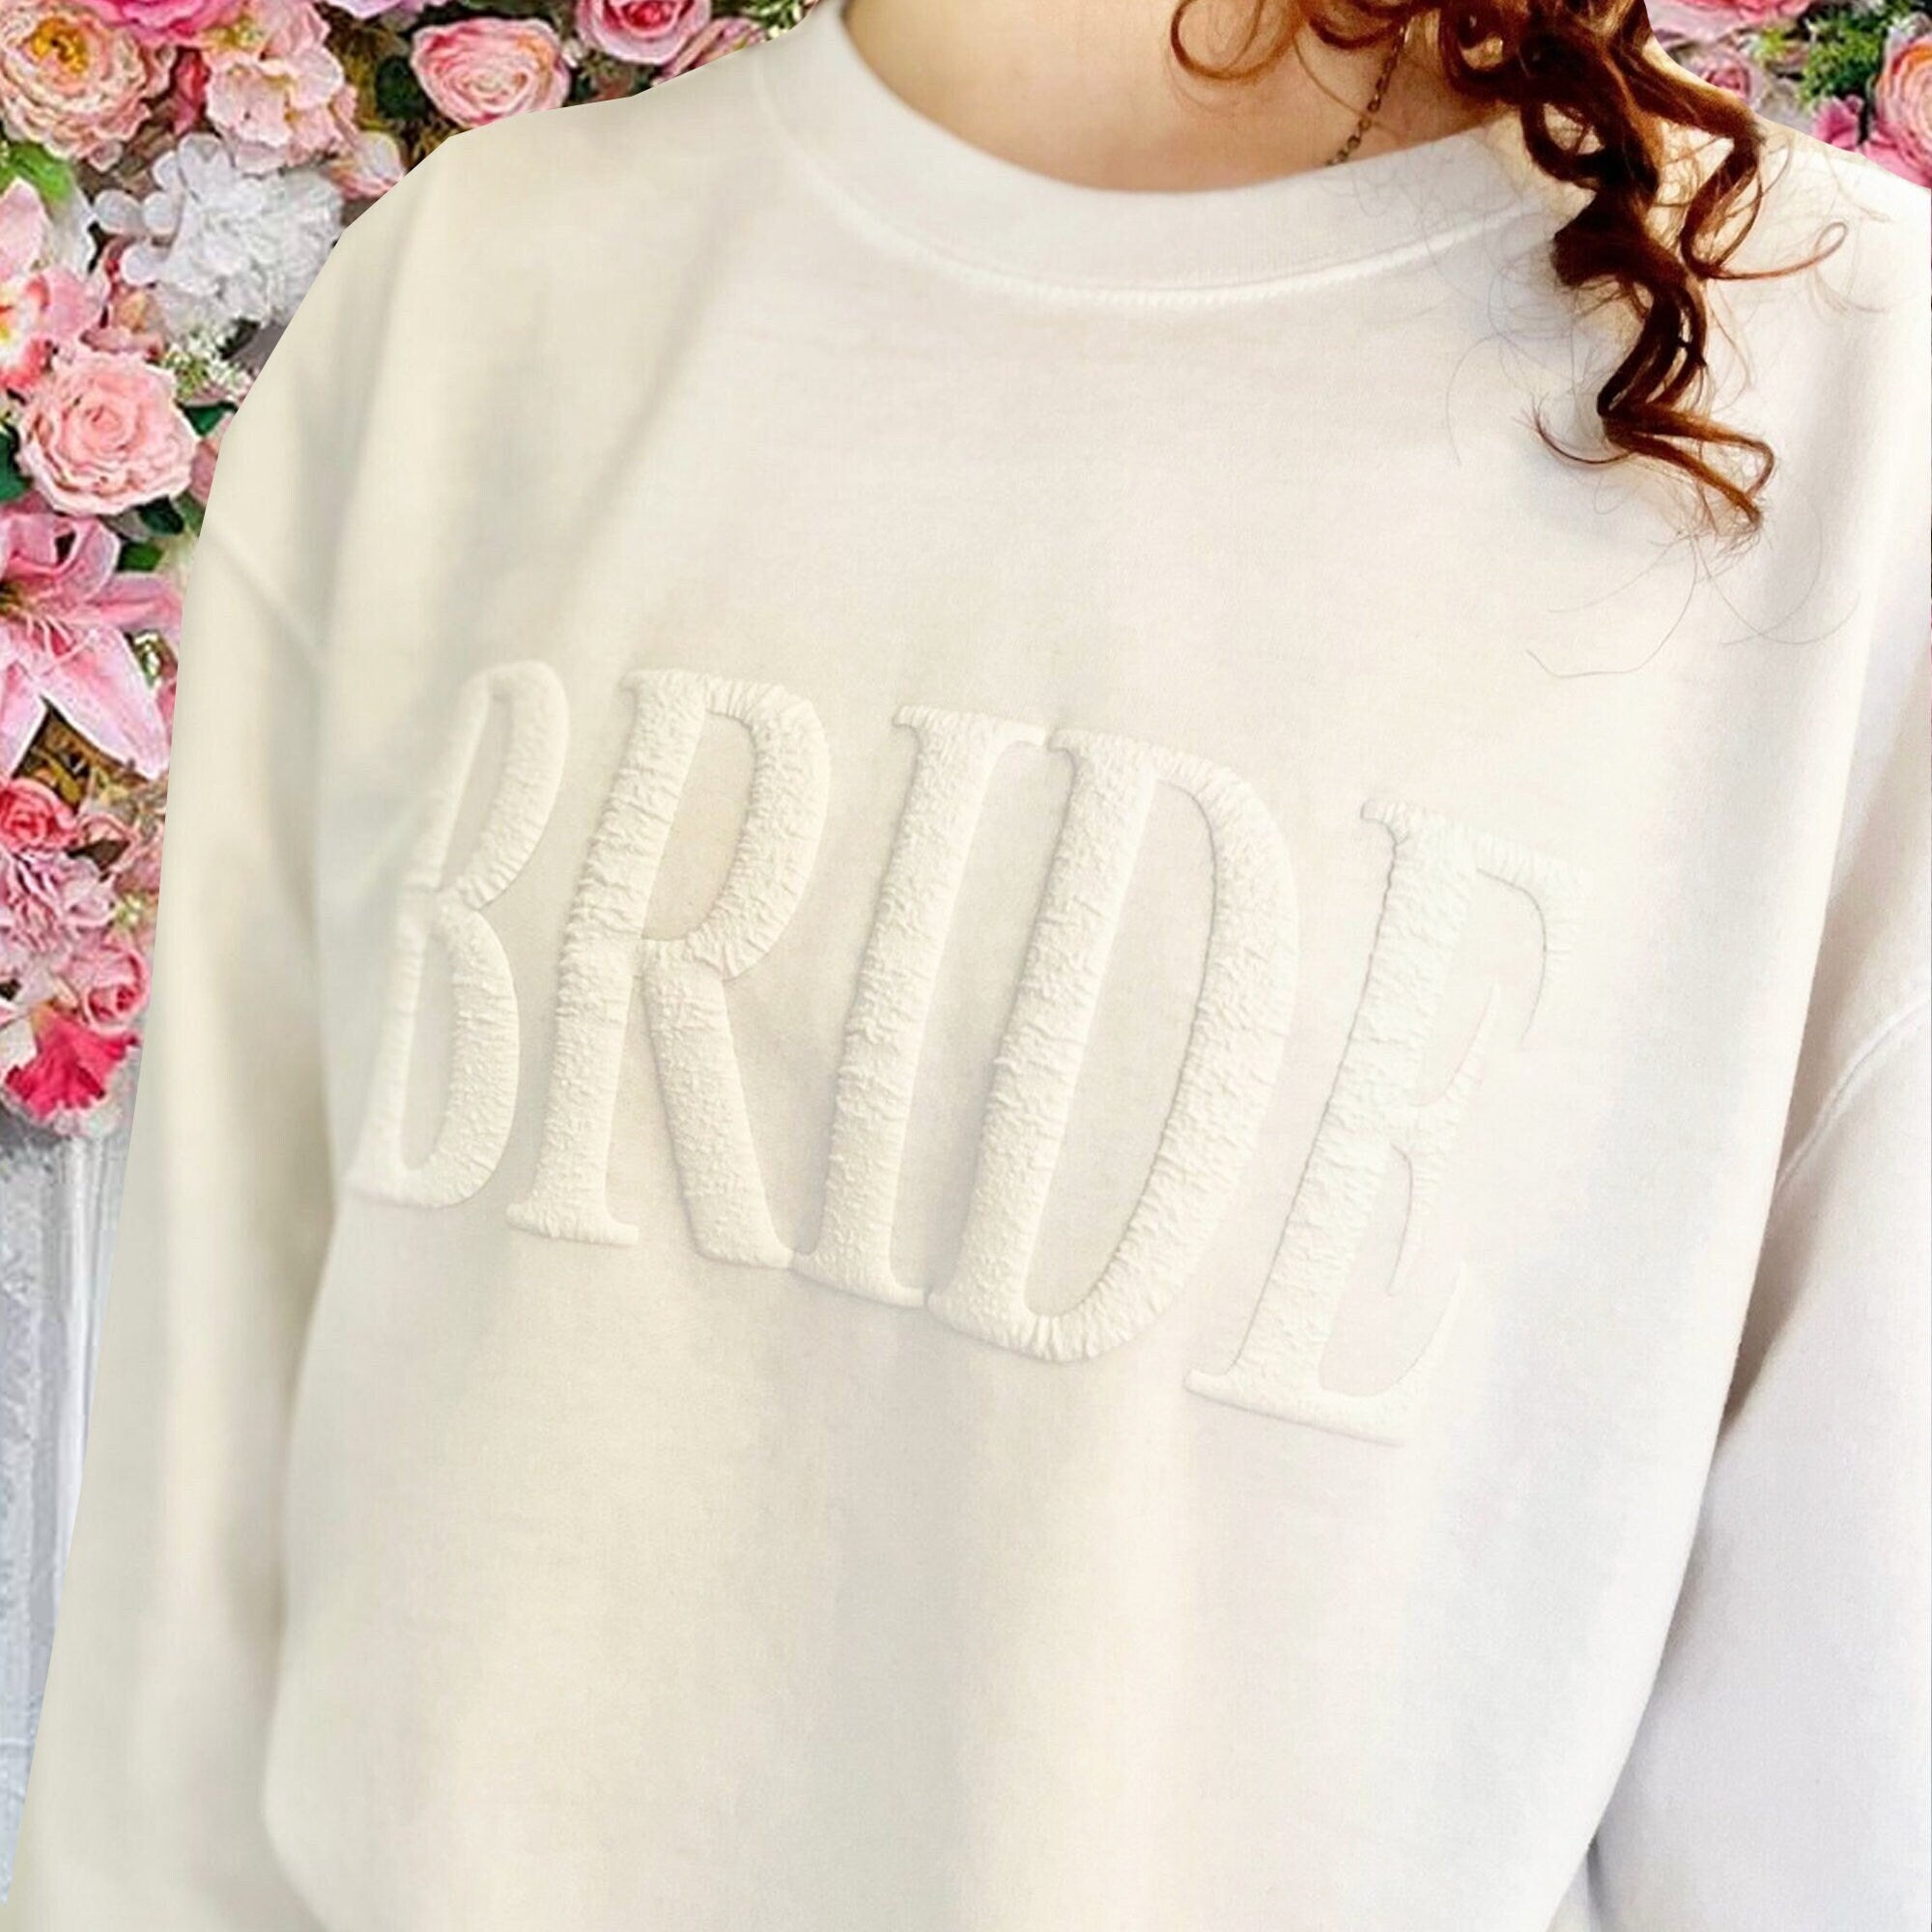 Embossed Bride Sweatshirt, Bride Groom Jumper, Wifey Hubby Sweatshirt, Mr and Mrs Matching Jumpers Wedding Gift, Anniversary Gift, Lounge